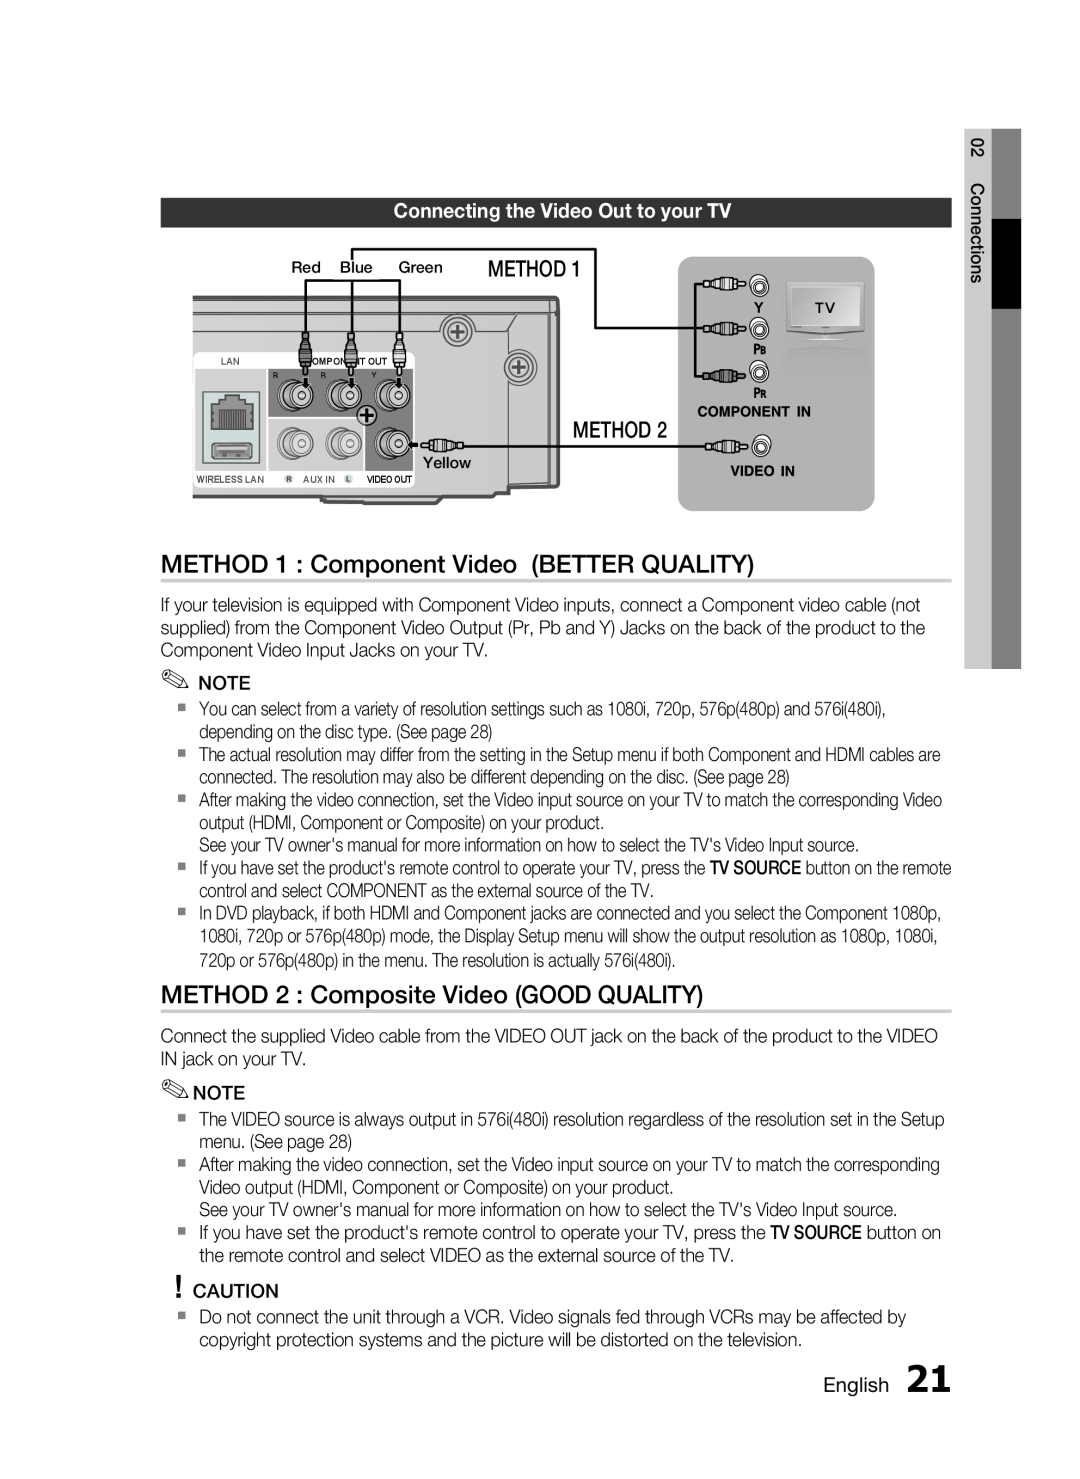 Samsung HT-C5200 METHOD 1 Component Video BETTER QUALITY, METHOD 2 Composite Video GOOD QUALITY, Method, English 